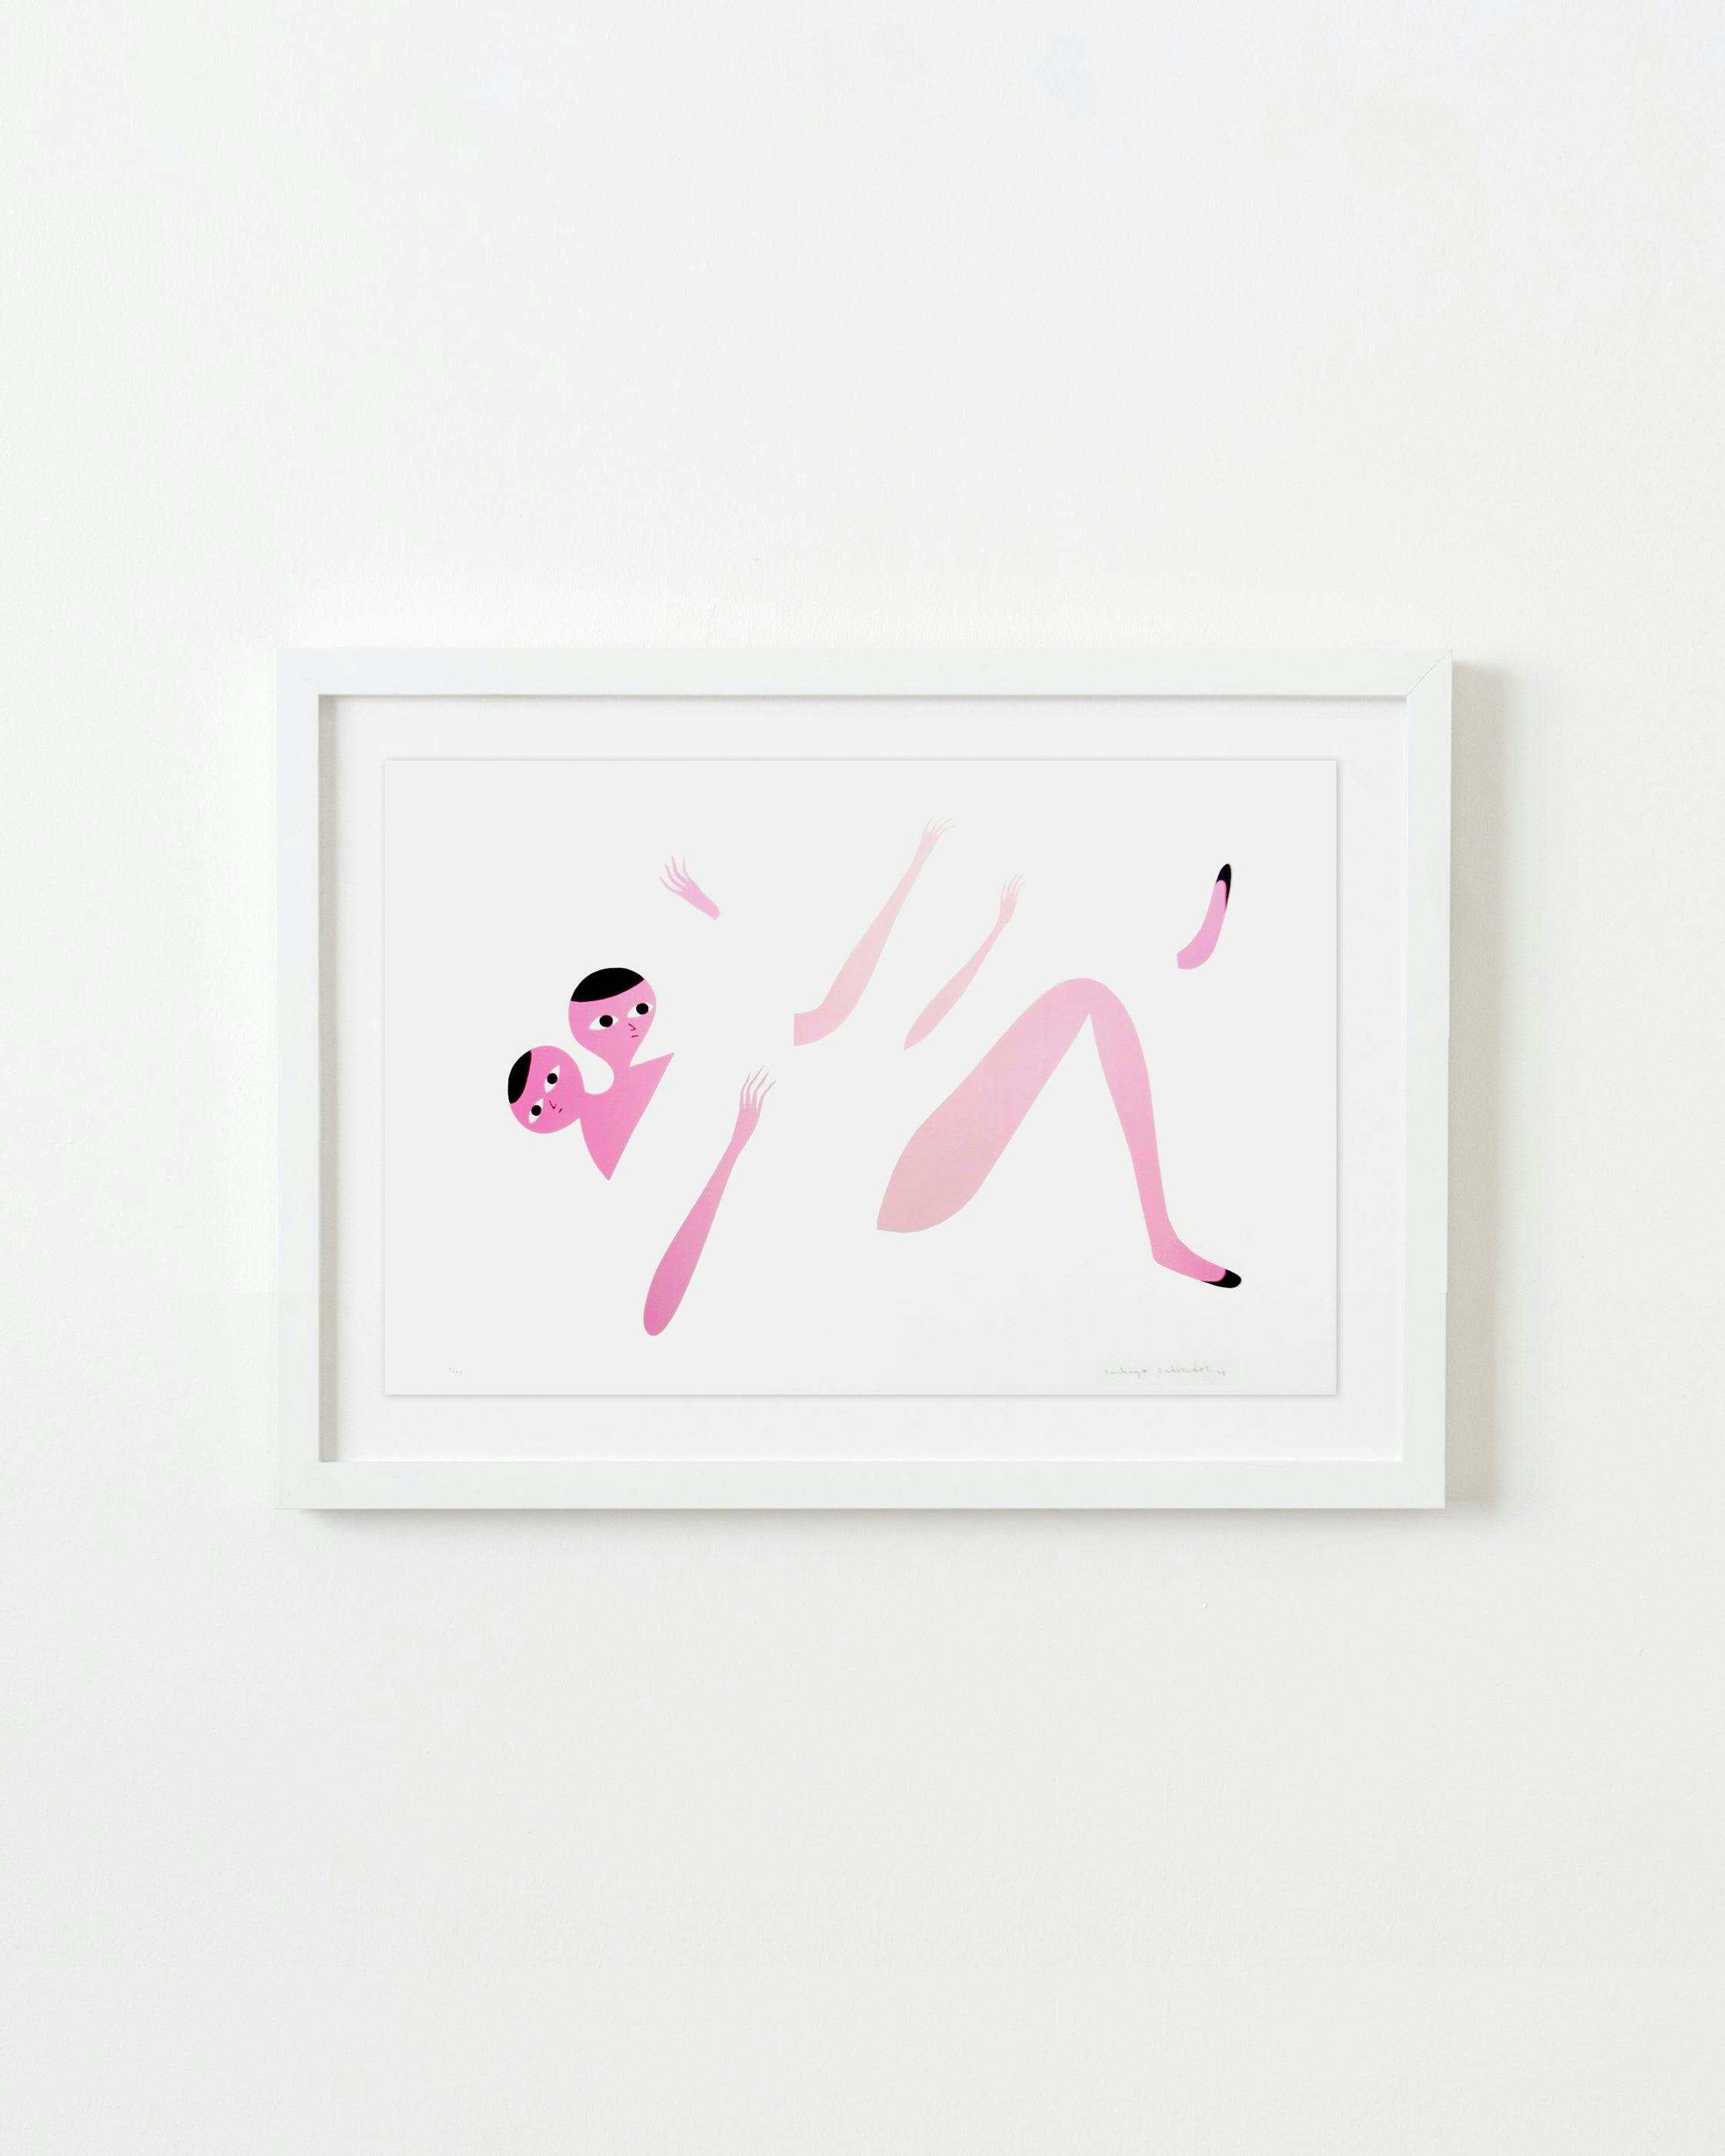 Print by Santiago Ascui titled "Serigrafia Intervenida Pink 1".